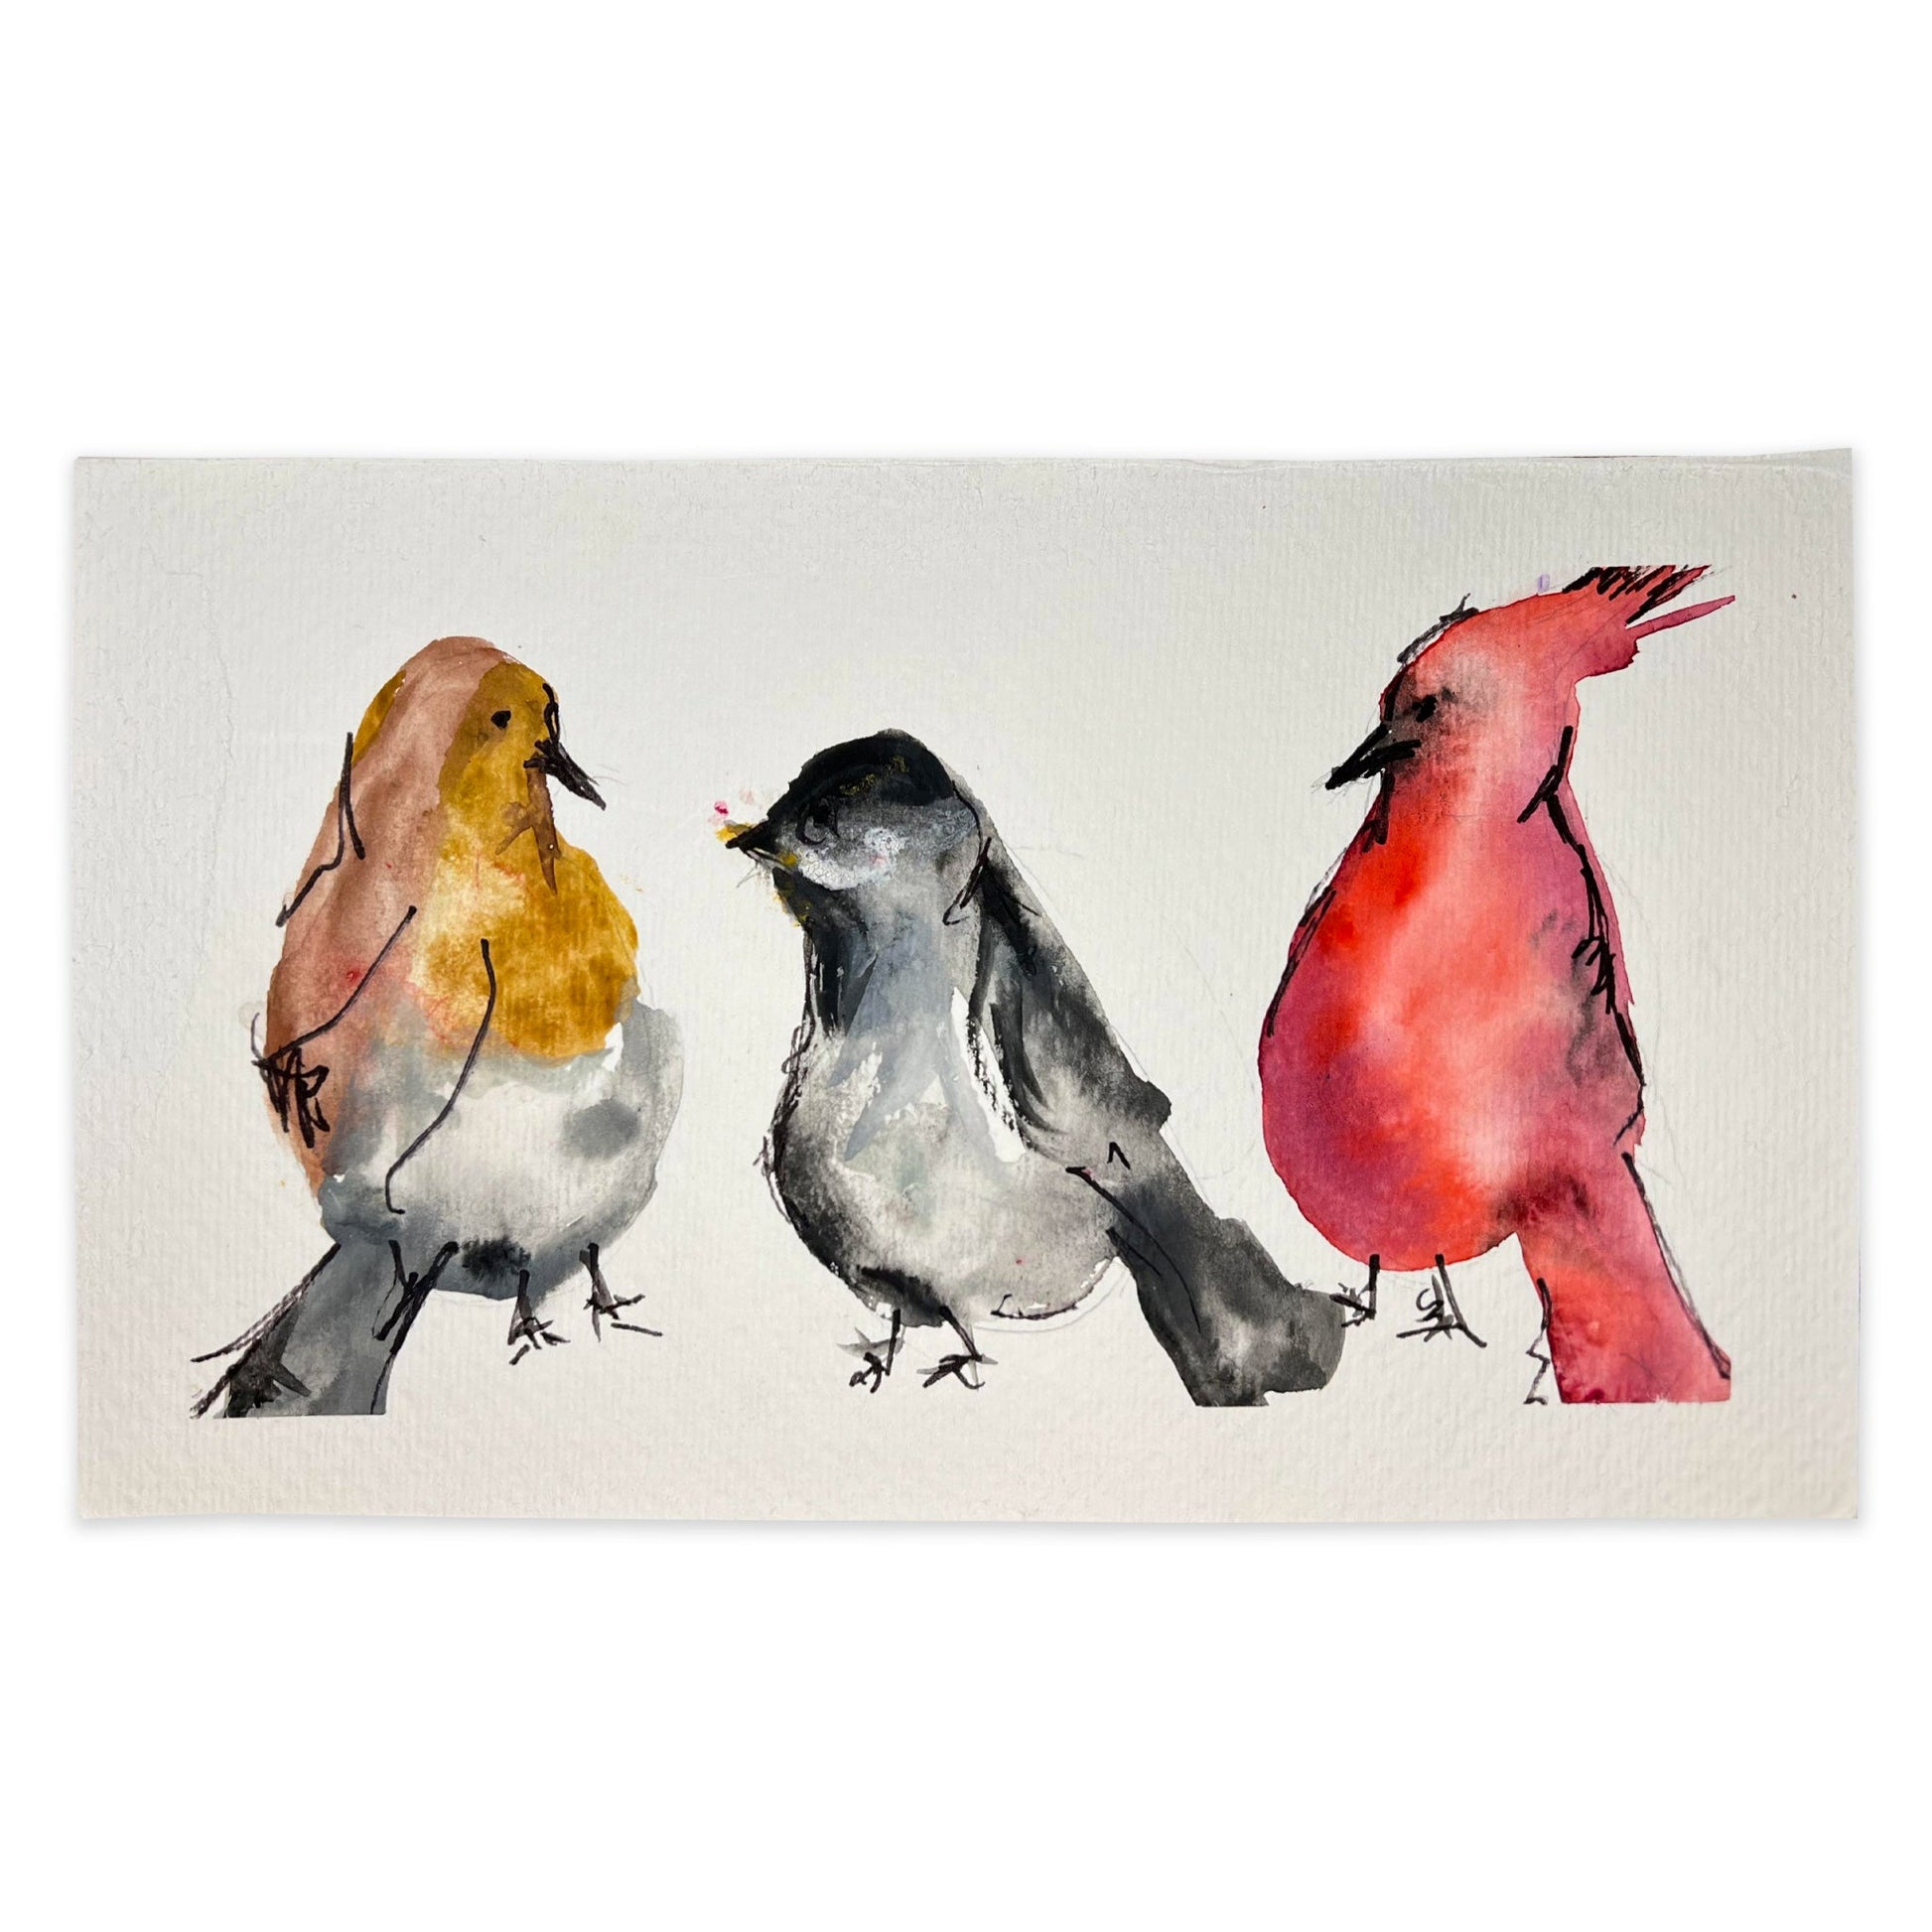 Three Little Birds - Original Watercolor